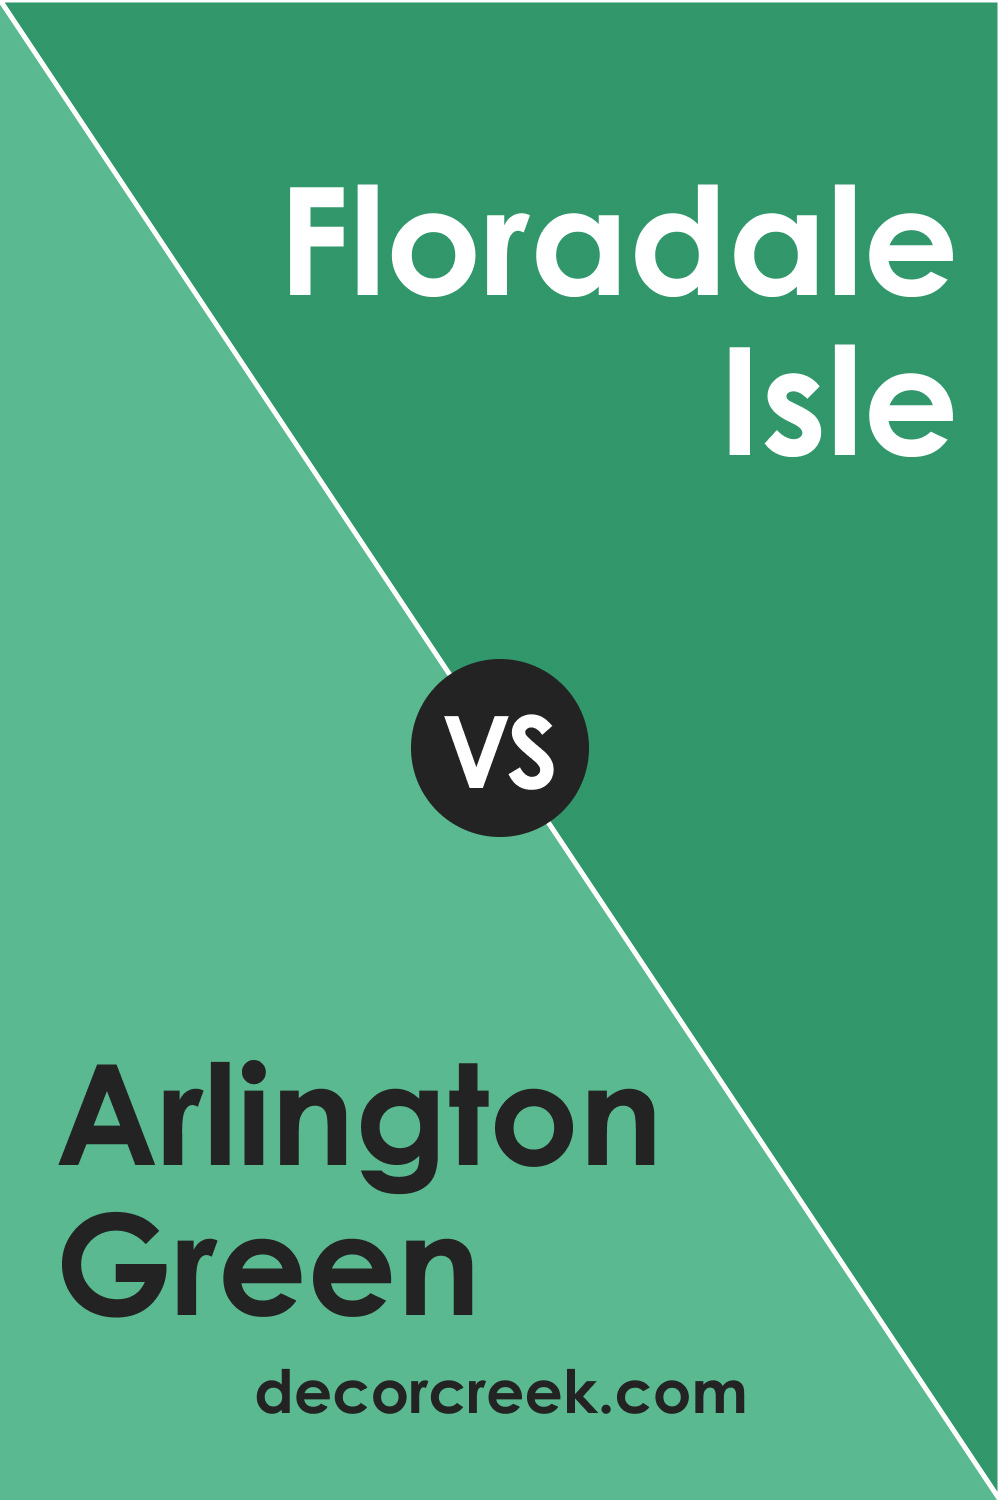 Arlington Green 580 vs. BM 581 Floradale Isle